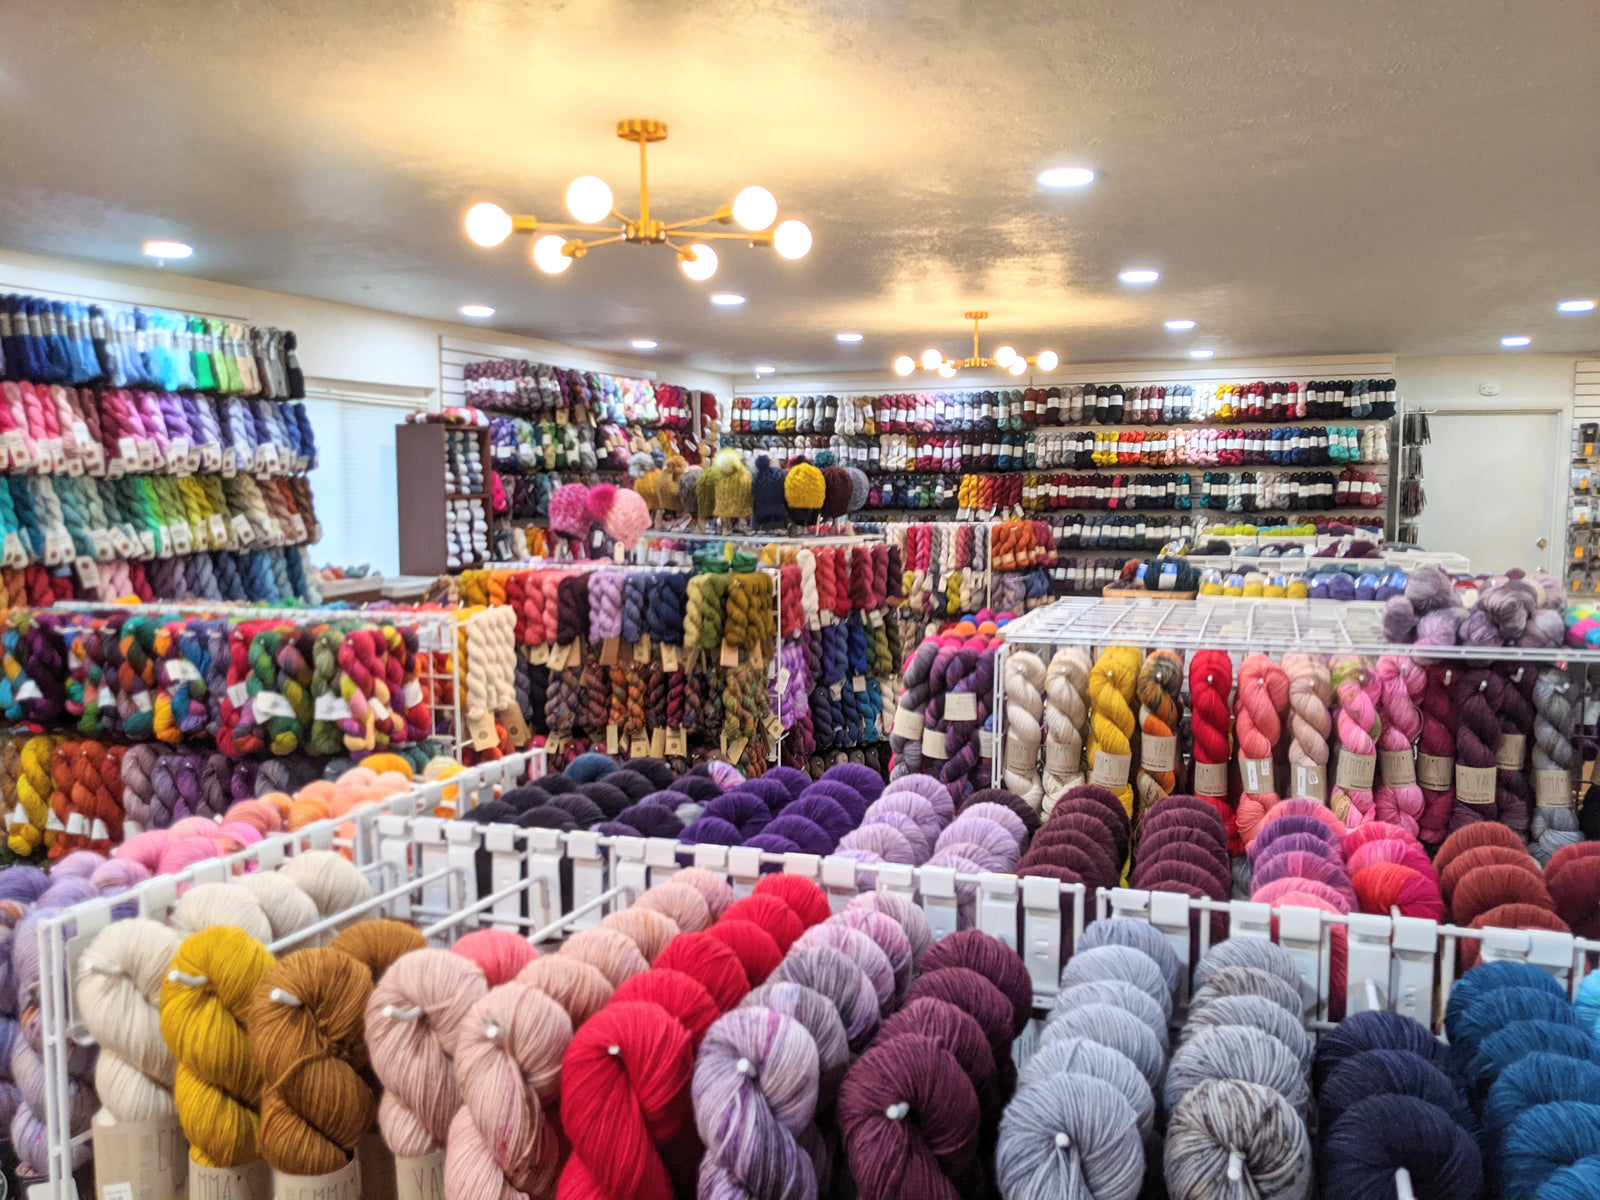 Colorful Yarns: A yarn and craft shop in Centennial, Colorado